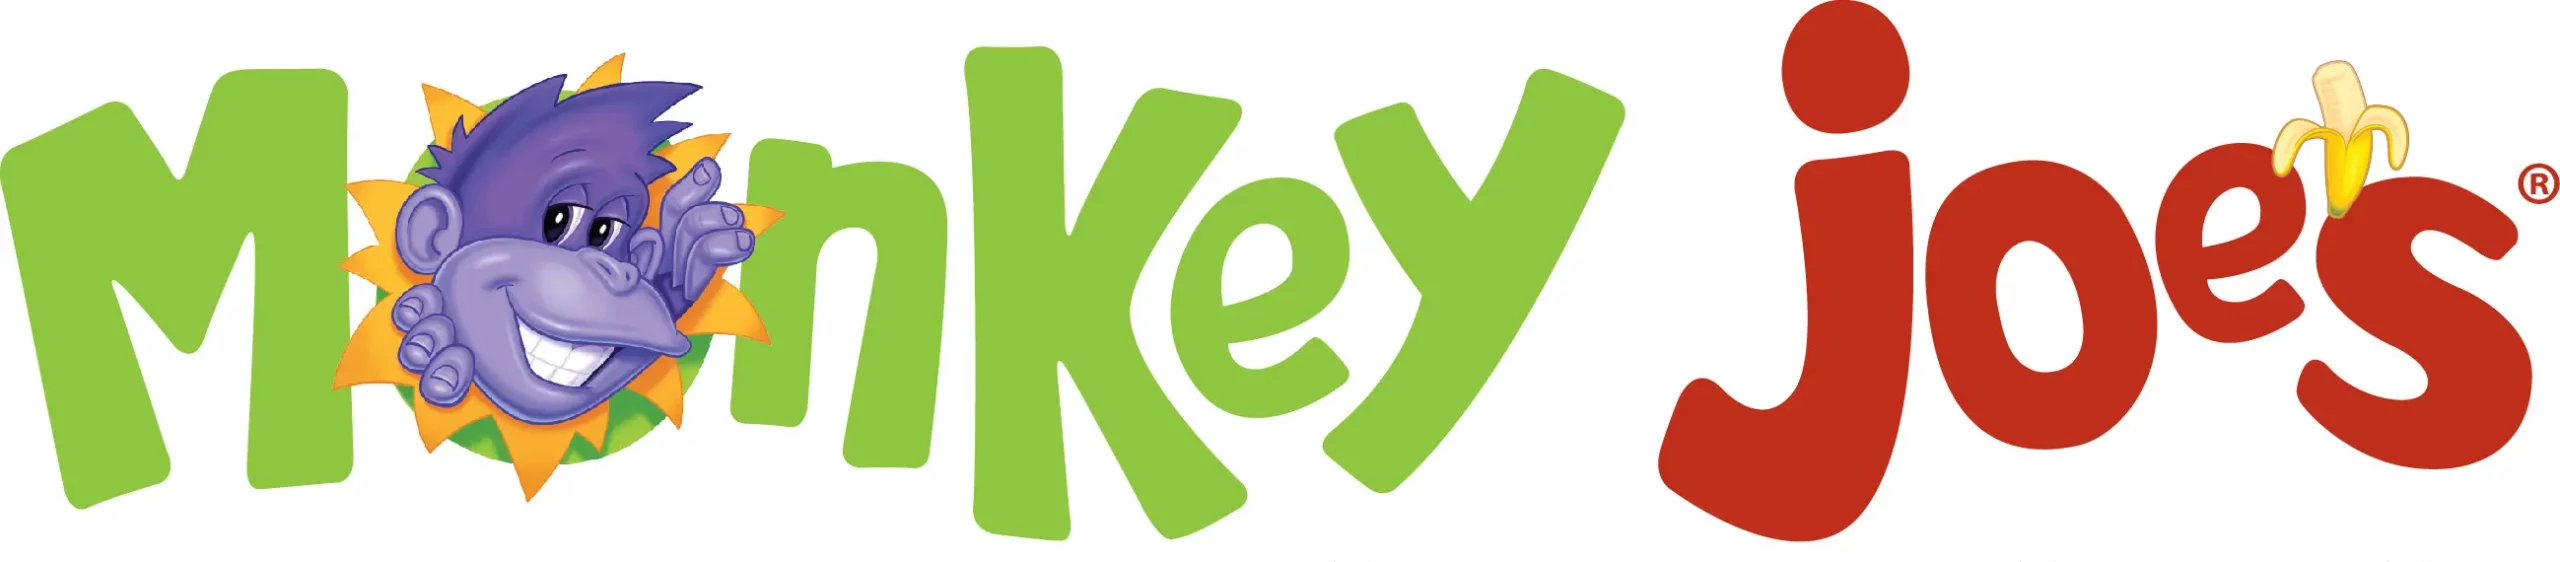 Monkey Joes logo